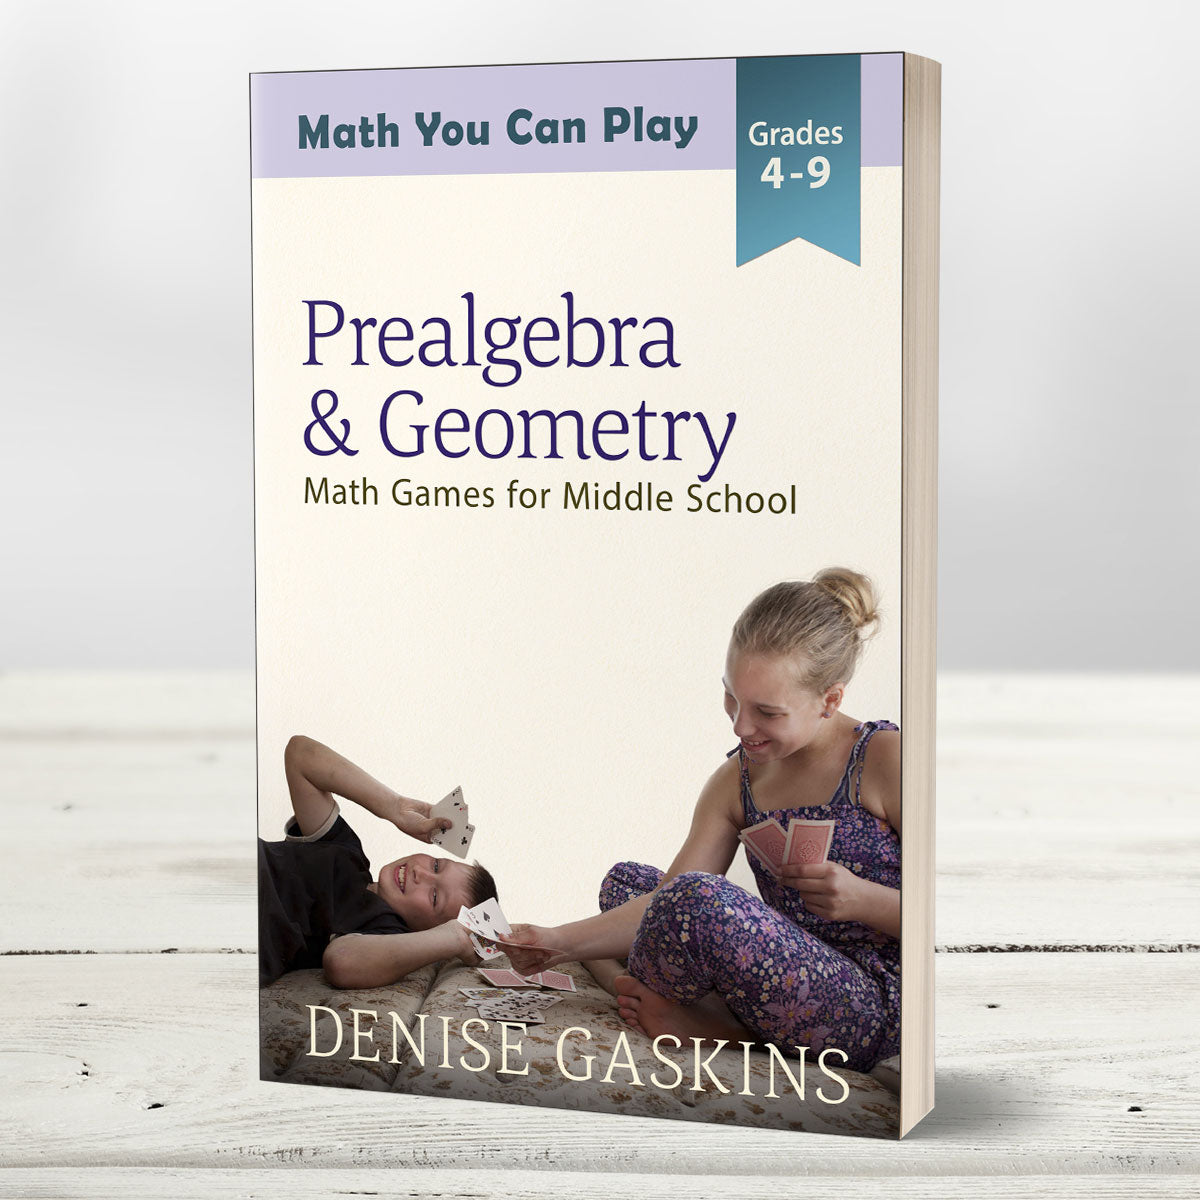 Prealgebra & Geometry math games paperback by Denise Gaskins